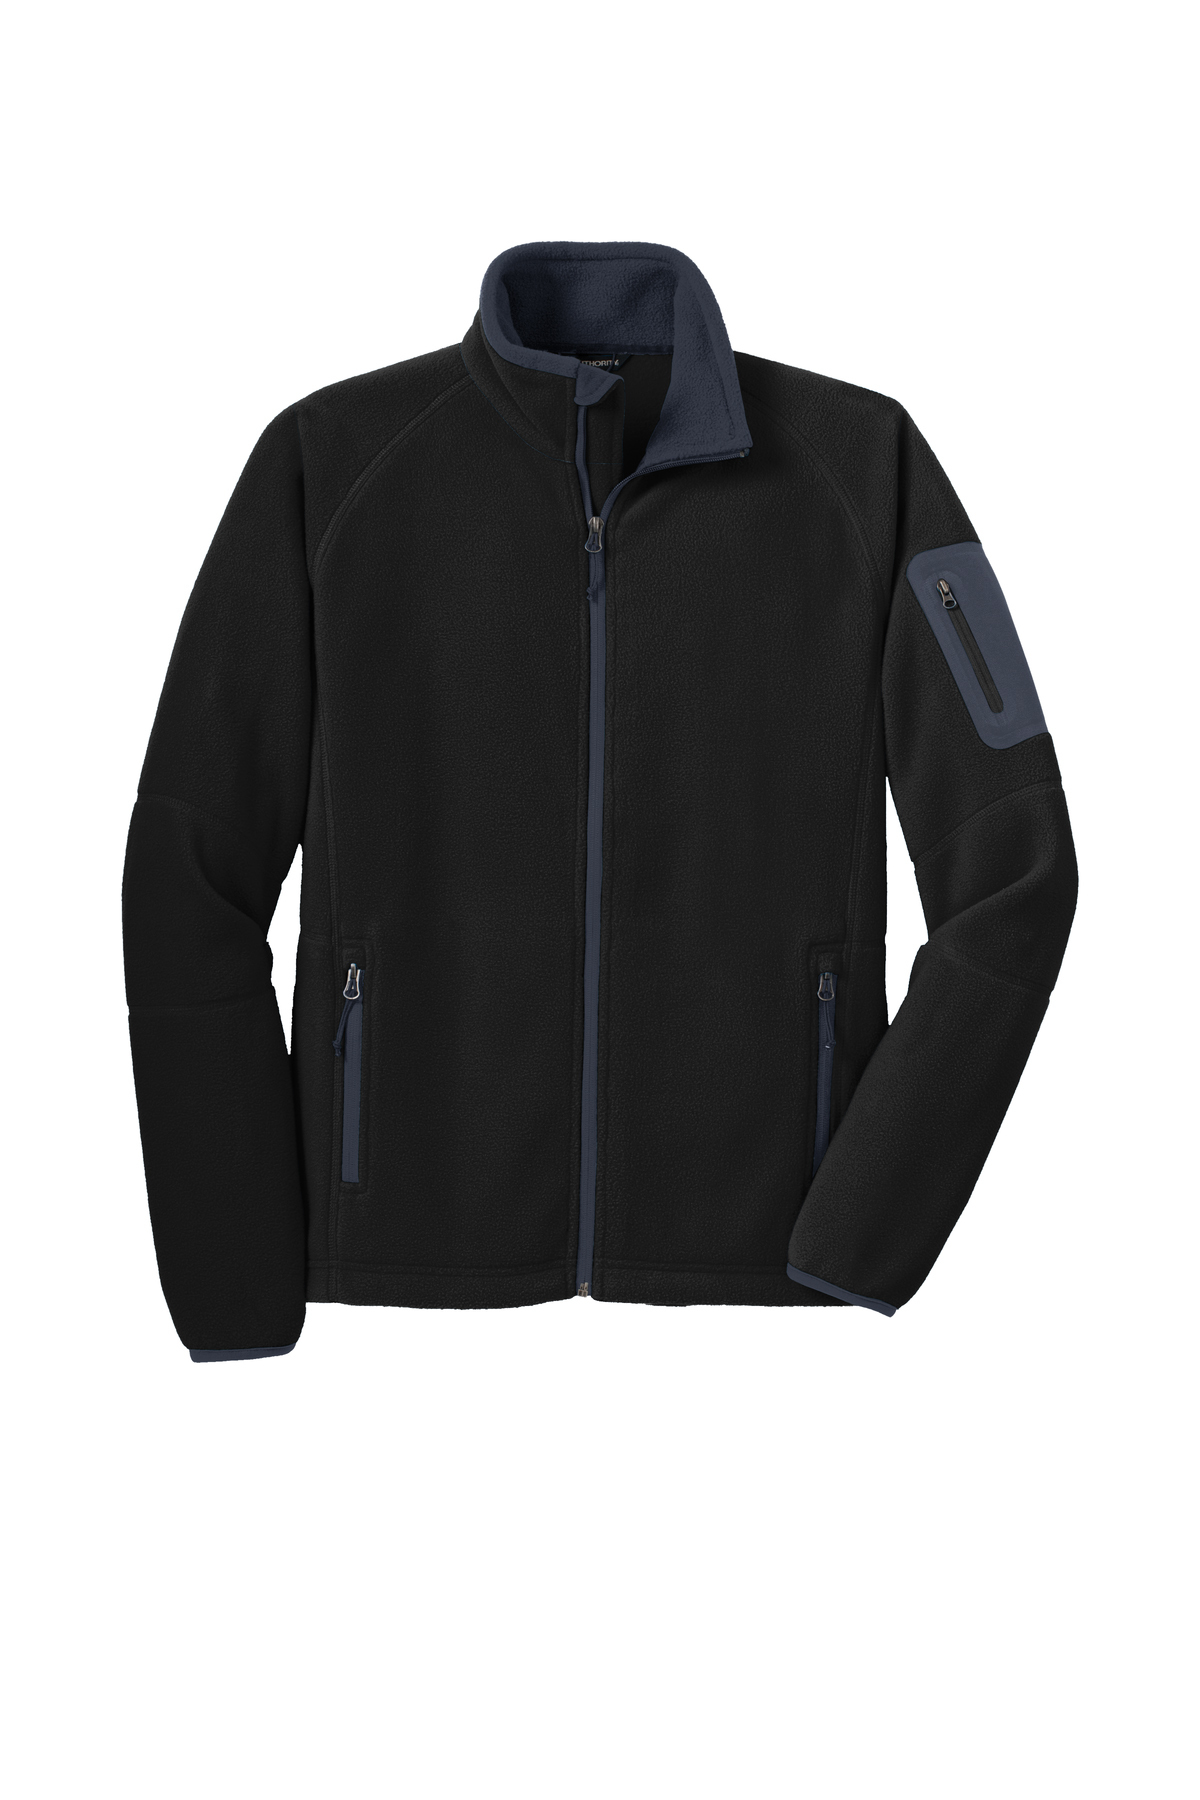 F229 Port Authority® Enhanced Value Fleece Full-Zip JacketThe